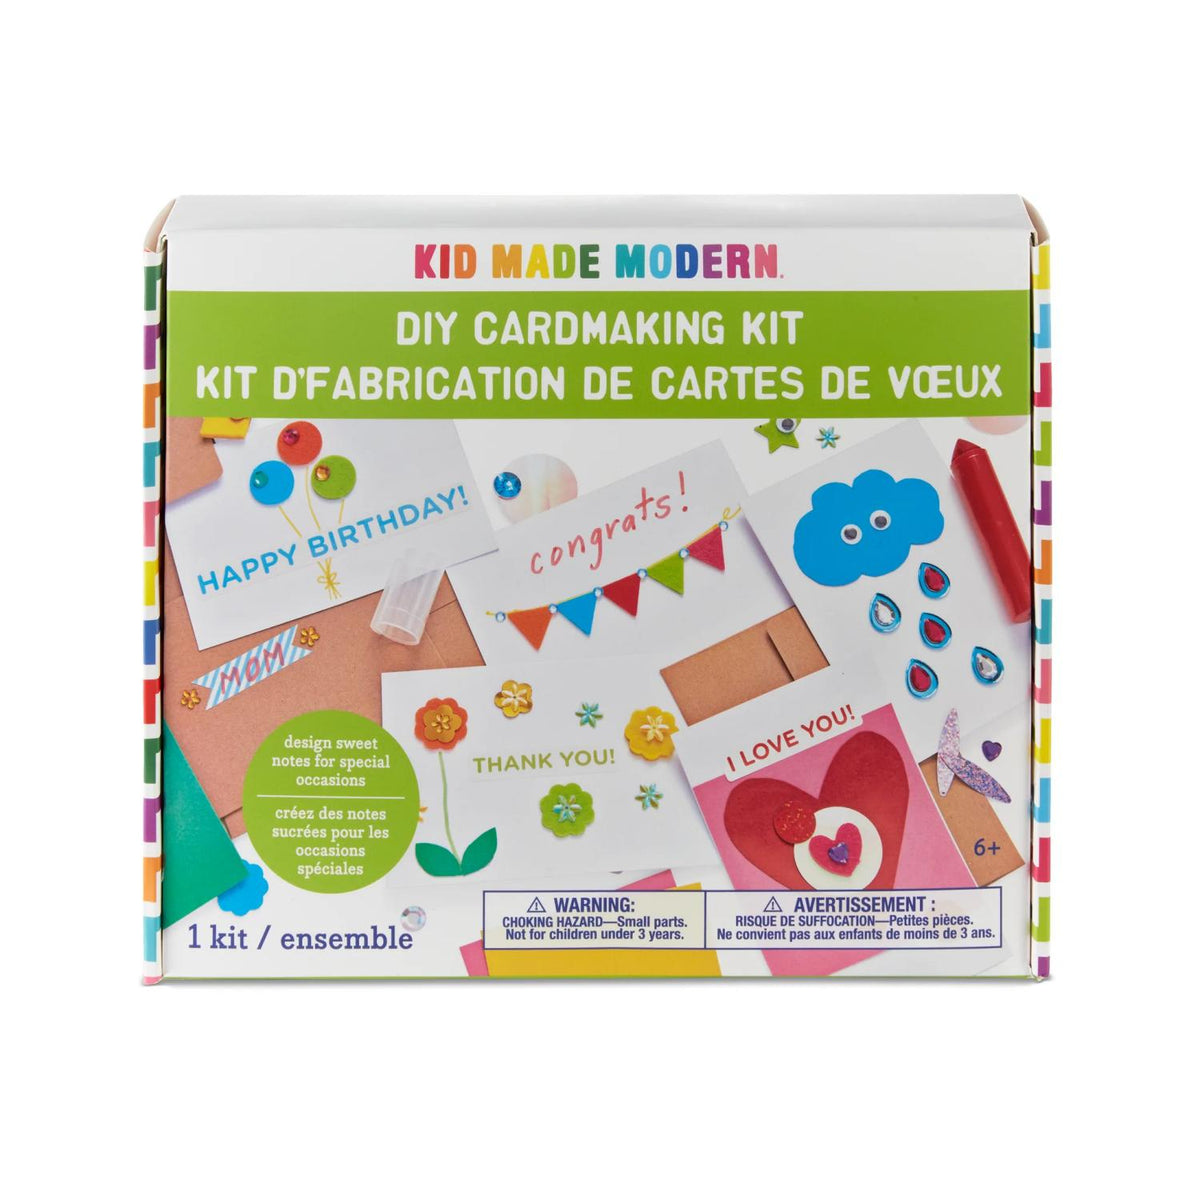 DIY Card Making Kit by Kid Made Modern – the blue béret